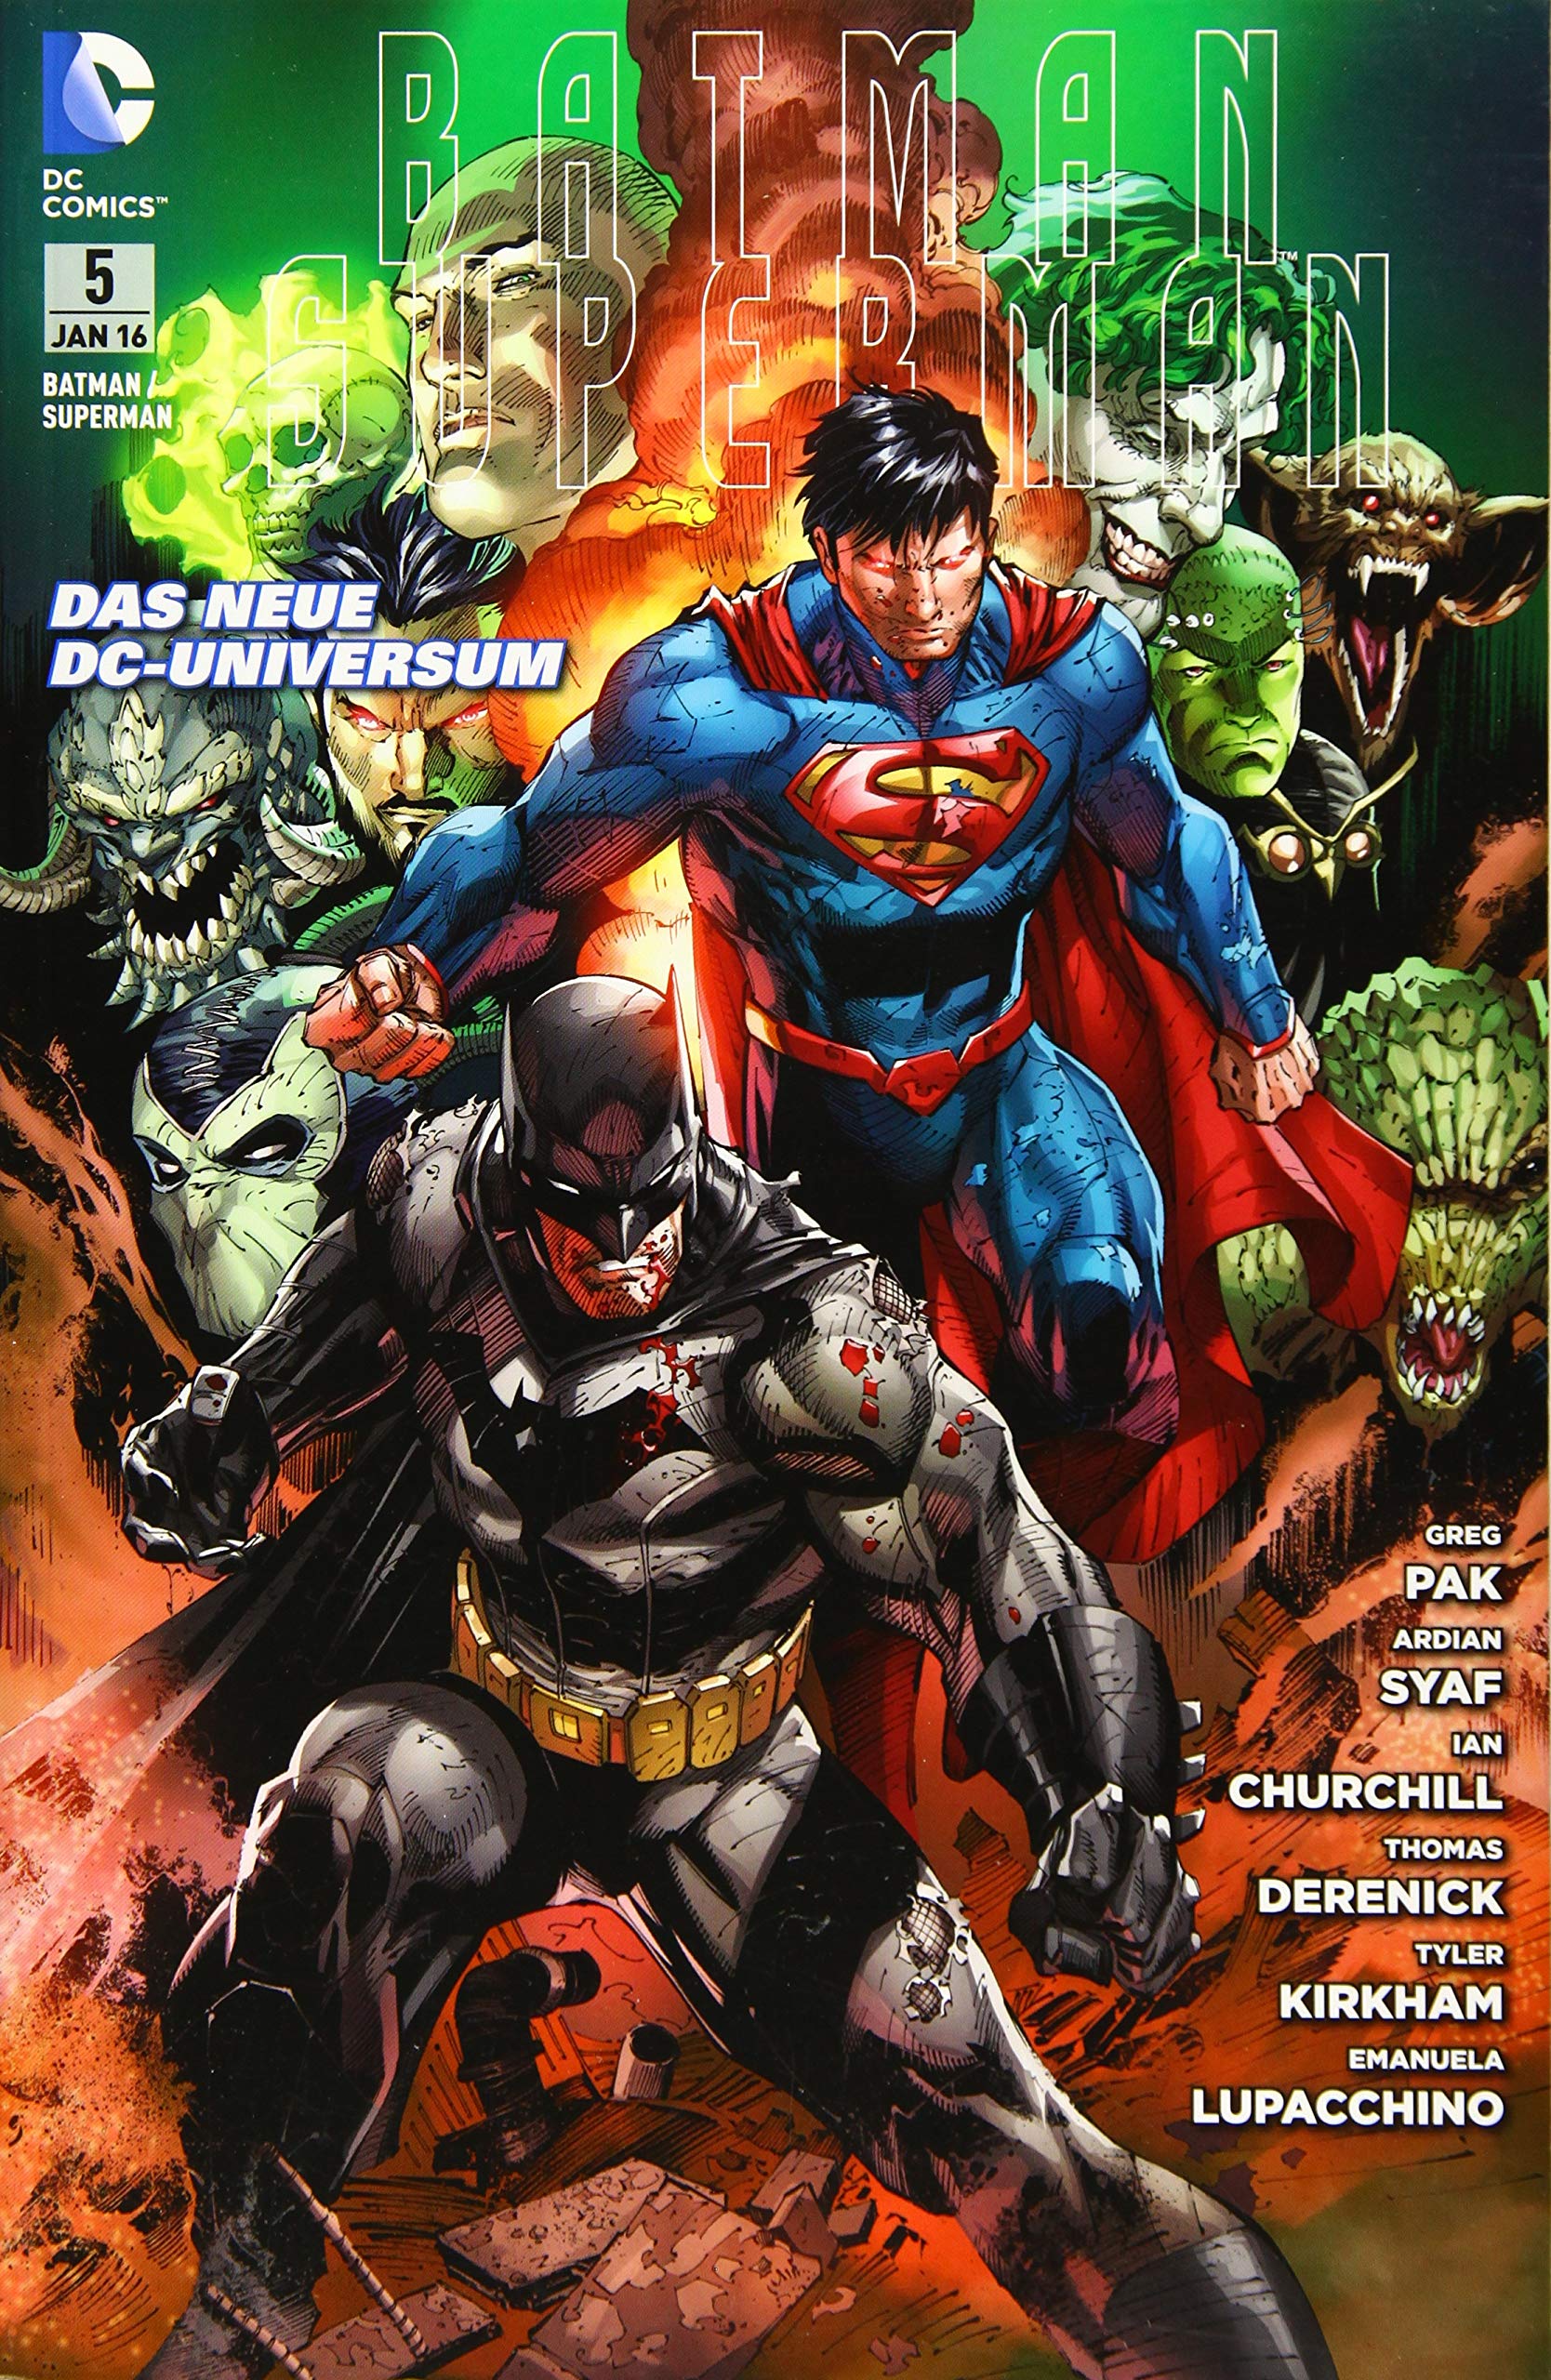 Mua Batman / Superman 05 Supermans Joker trên Amazon Nhật chính hãng 2023 |  Giaonhan247